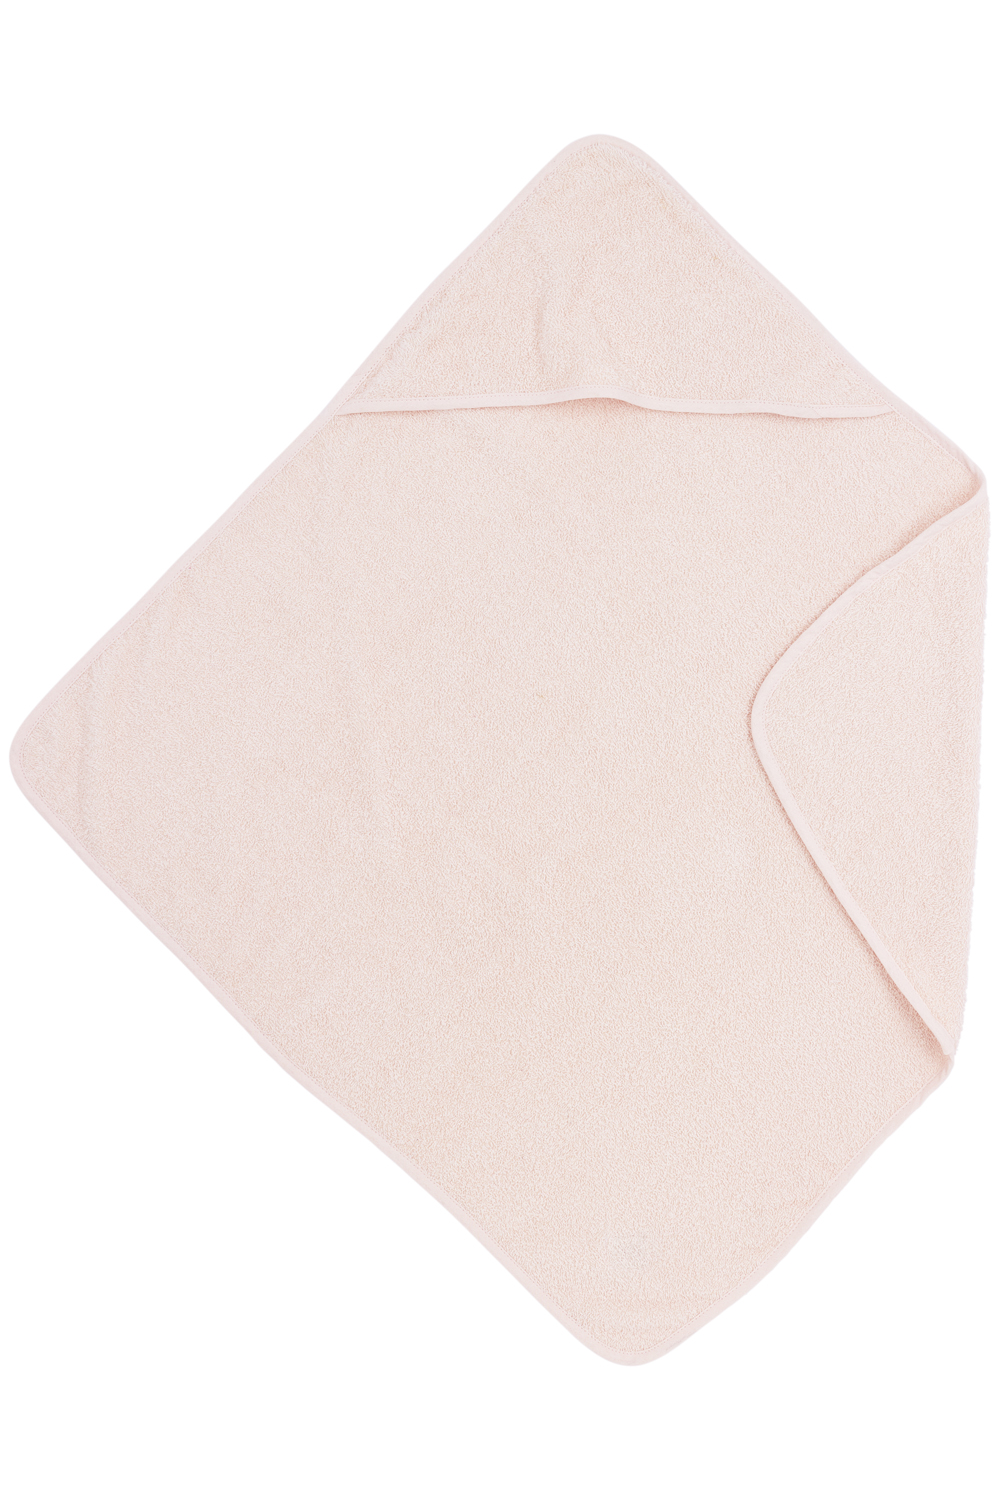 Badcape Basic Badstof - Soft Pink - 75x75cm